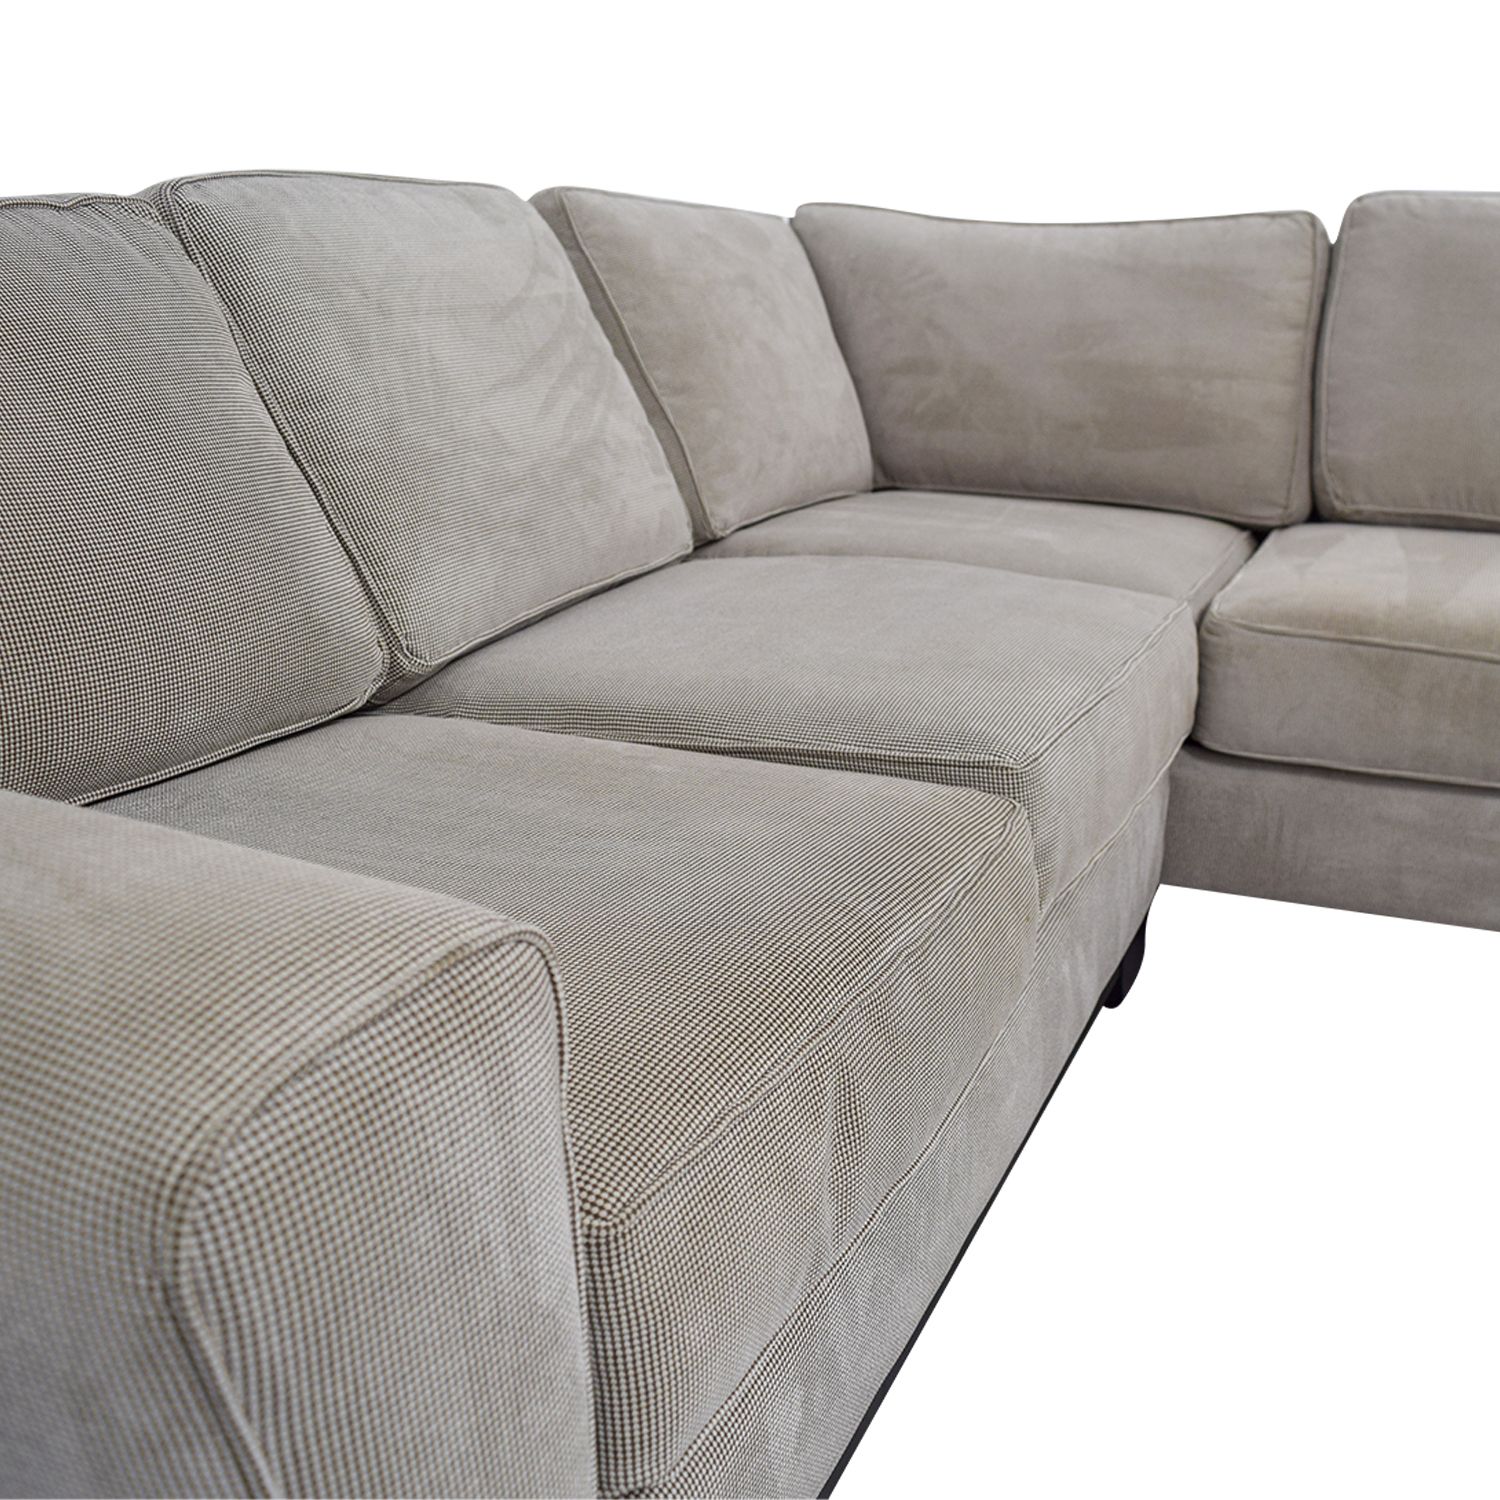 84% Off – Jordan's Furniture Jordan's Furniture Beige L Shaped In Beige L Shaped Sectional Sofas (Gallery 8 of 20)